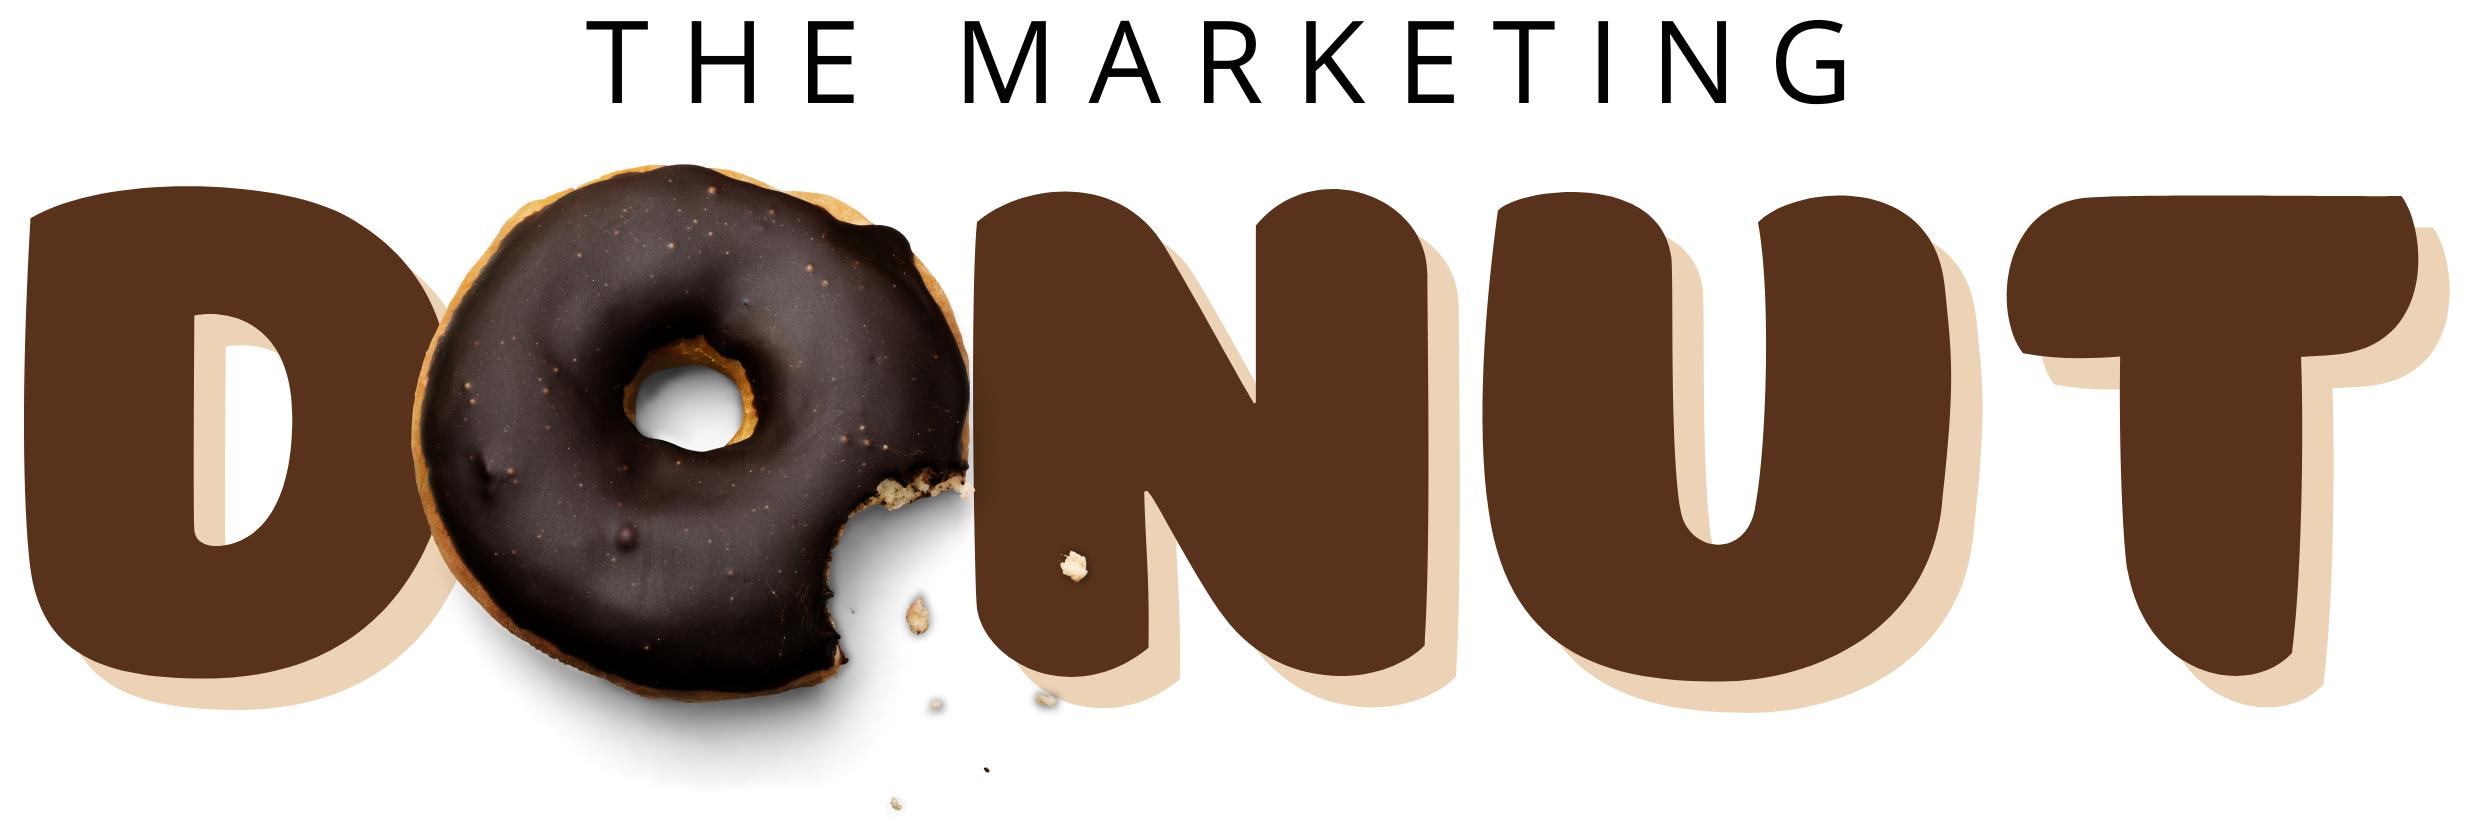 The Marketing Donut